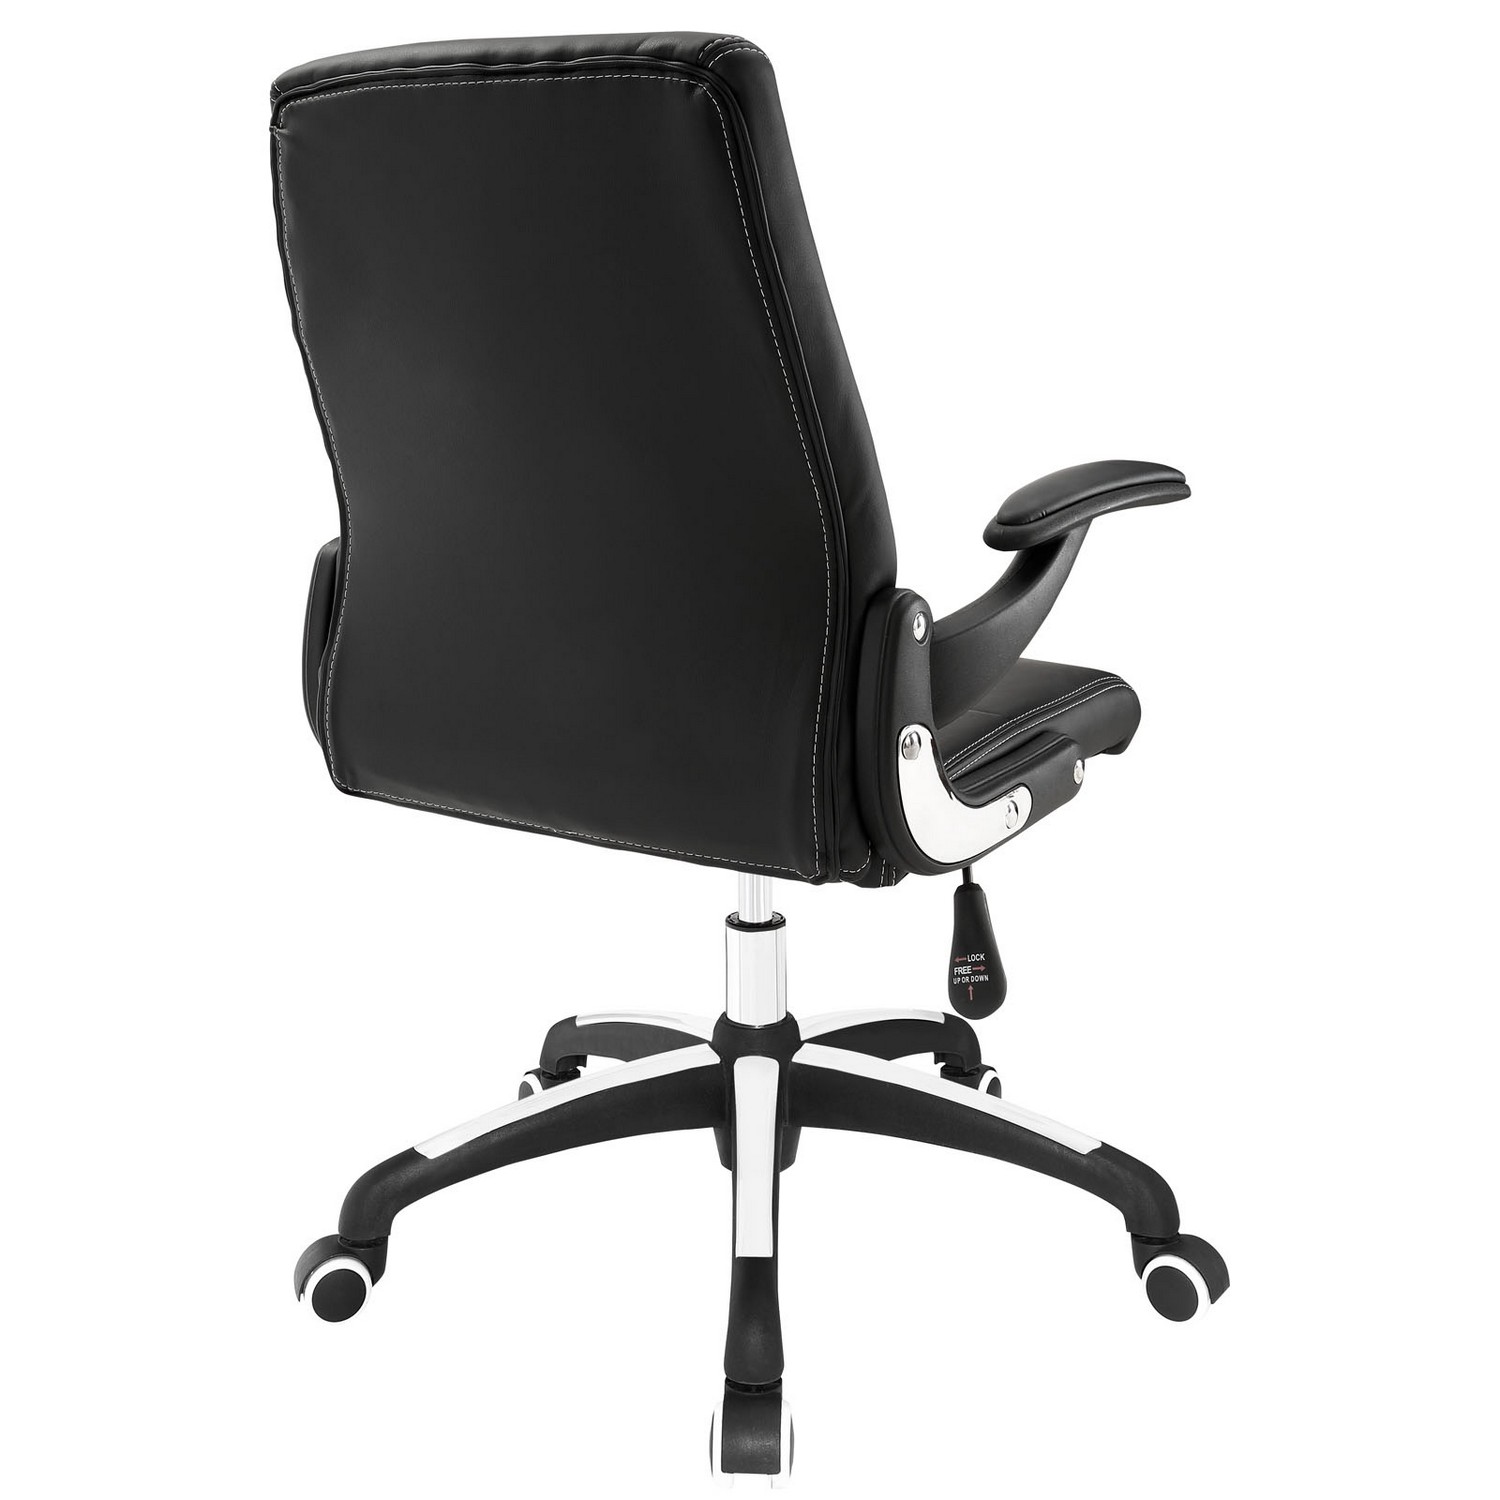 Modway Premier Highback Office Chair - Black